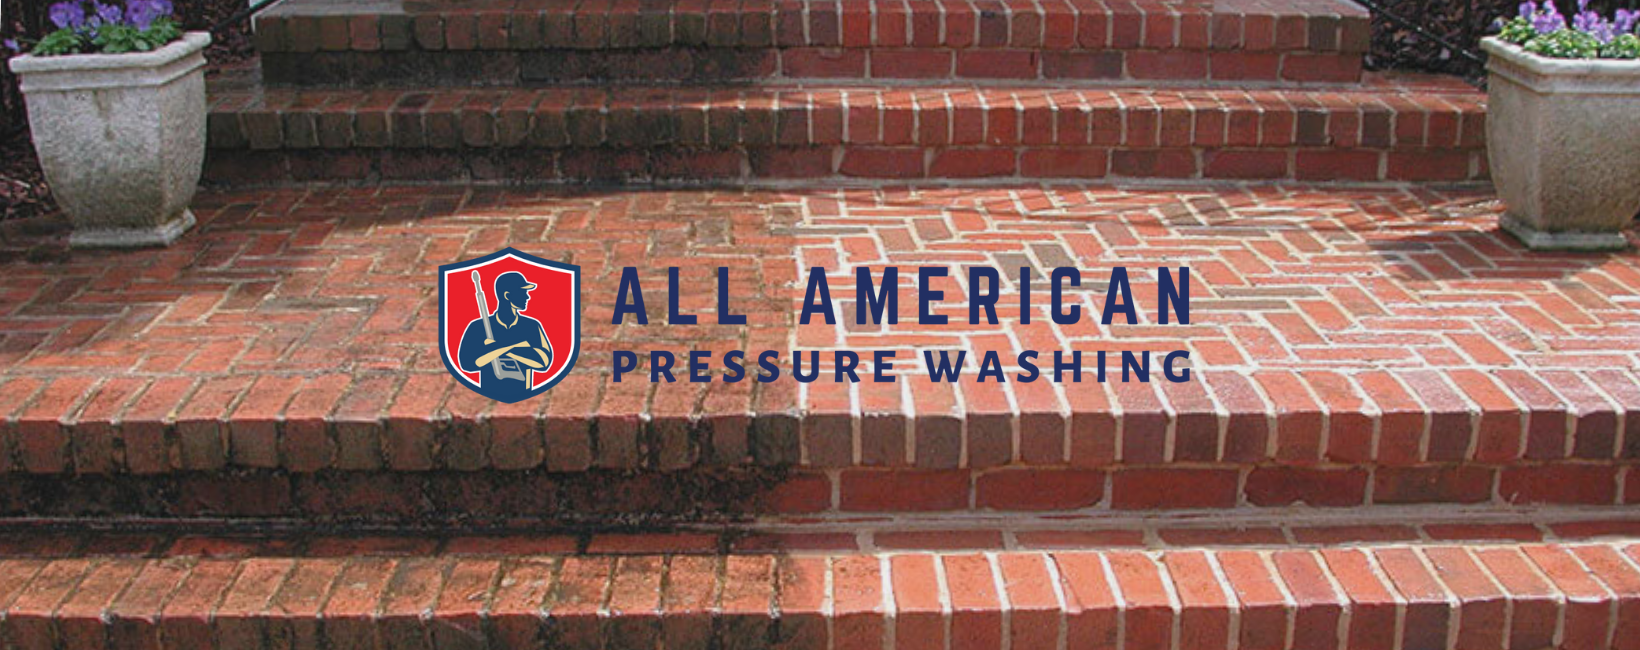 All American Pressure Washing 4